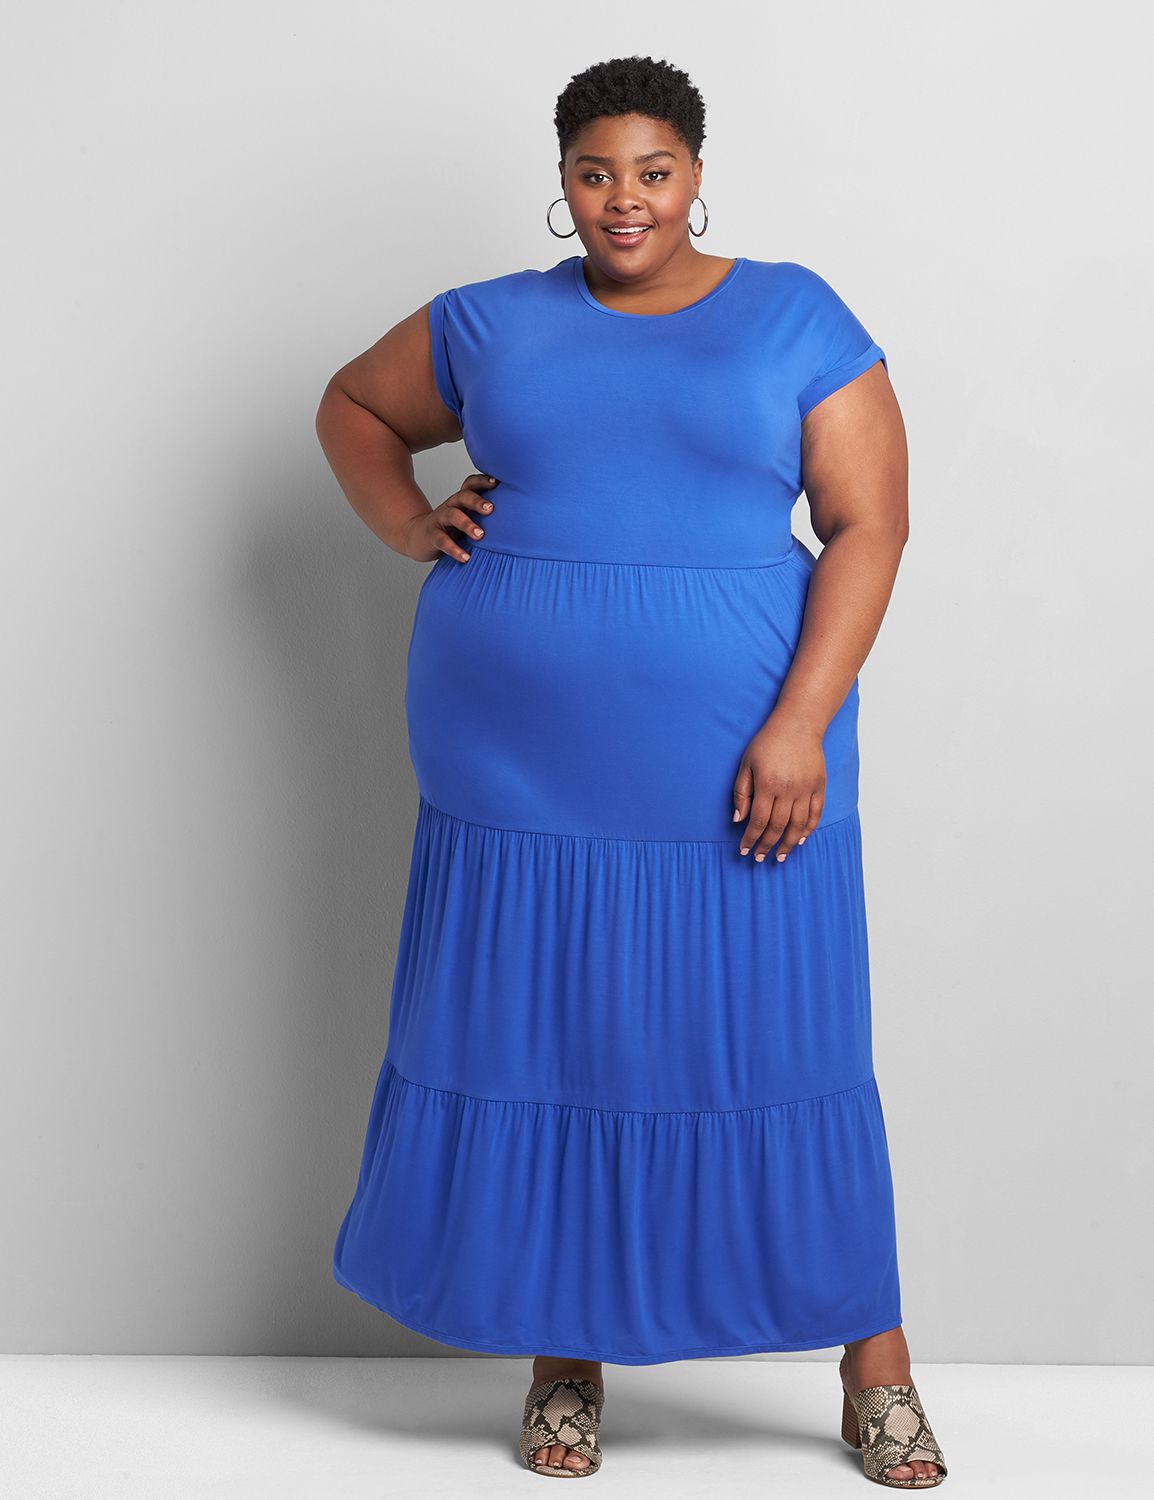 Lane Bryant Women's Tiered Jersey Maxi Dress 14/16 Dazzling Blue